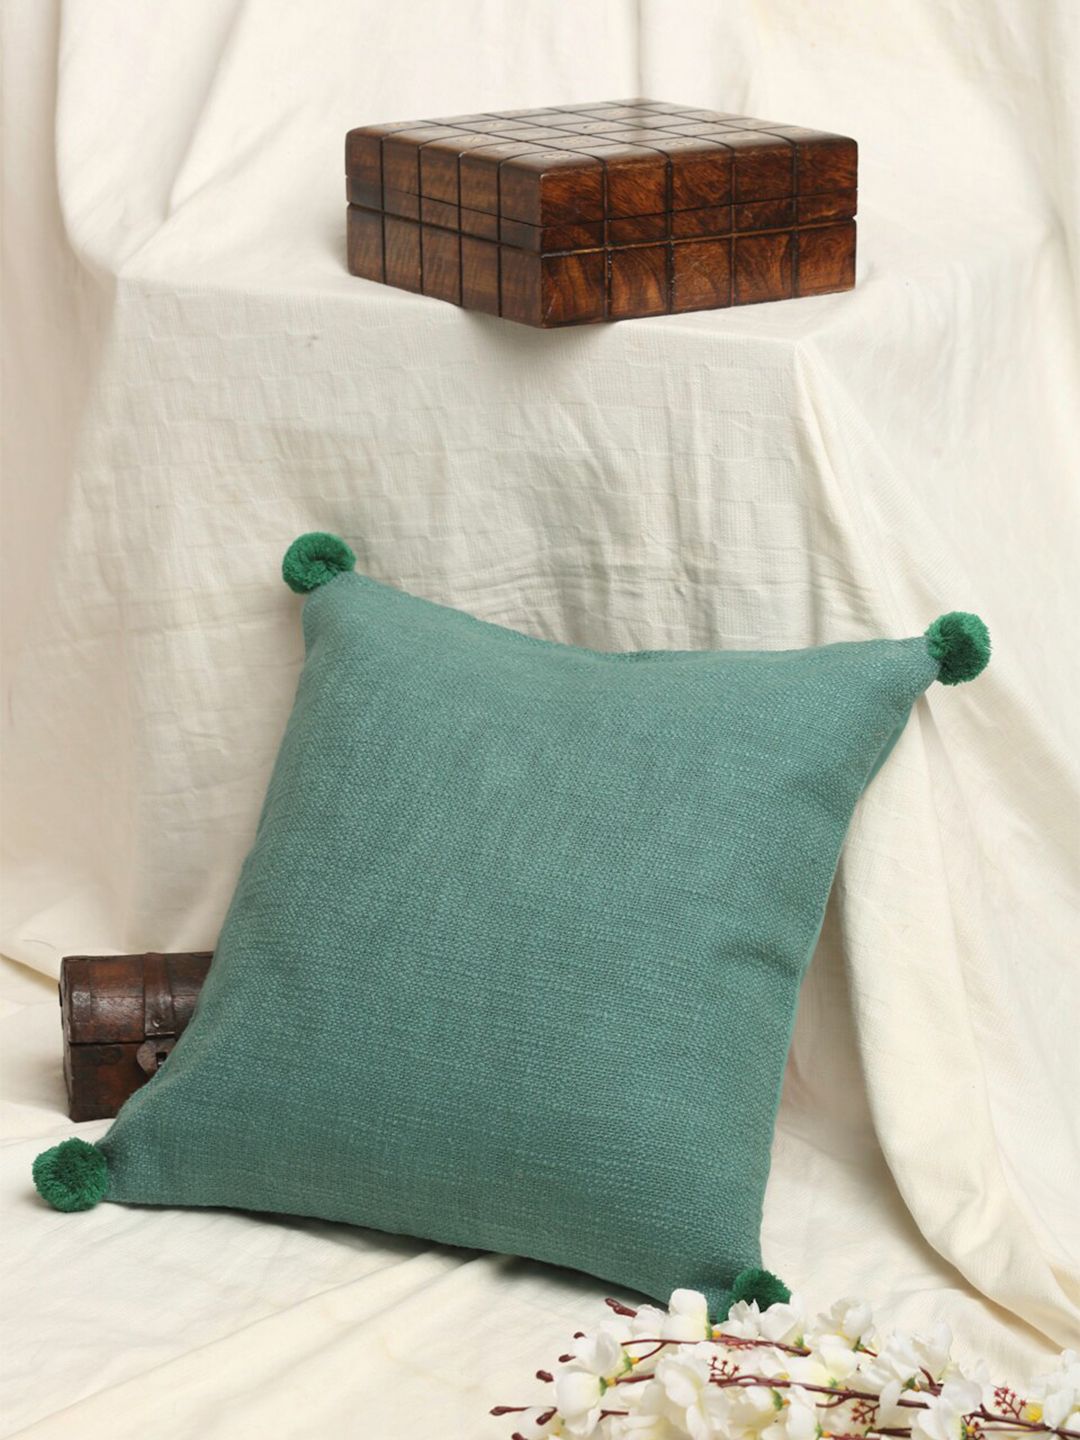 EK BY EKTA KAPOOR Teal 16 x 16" Square Cushion Covers" Price in India